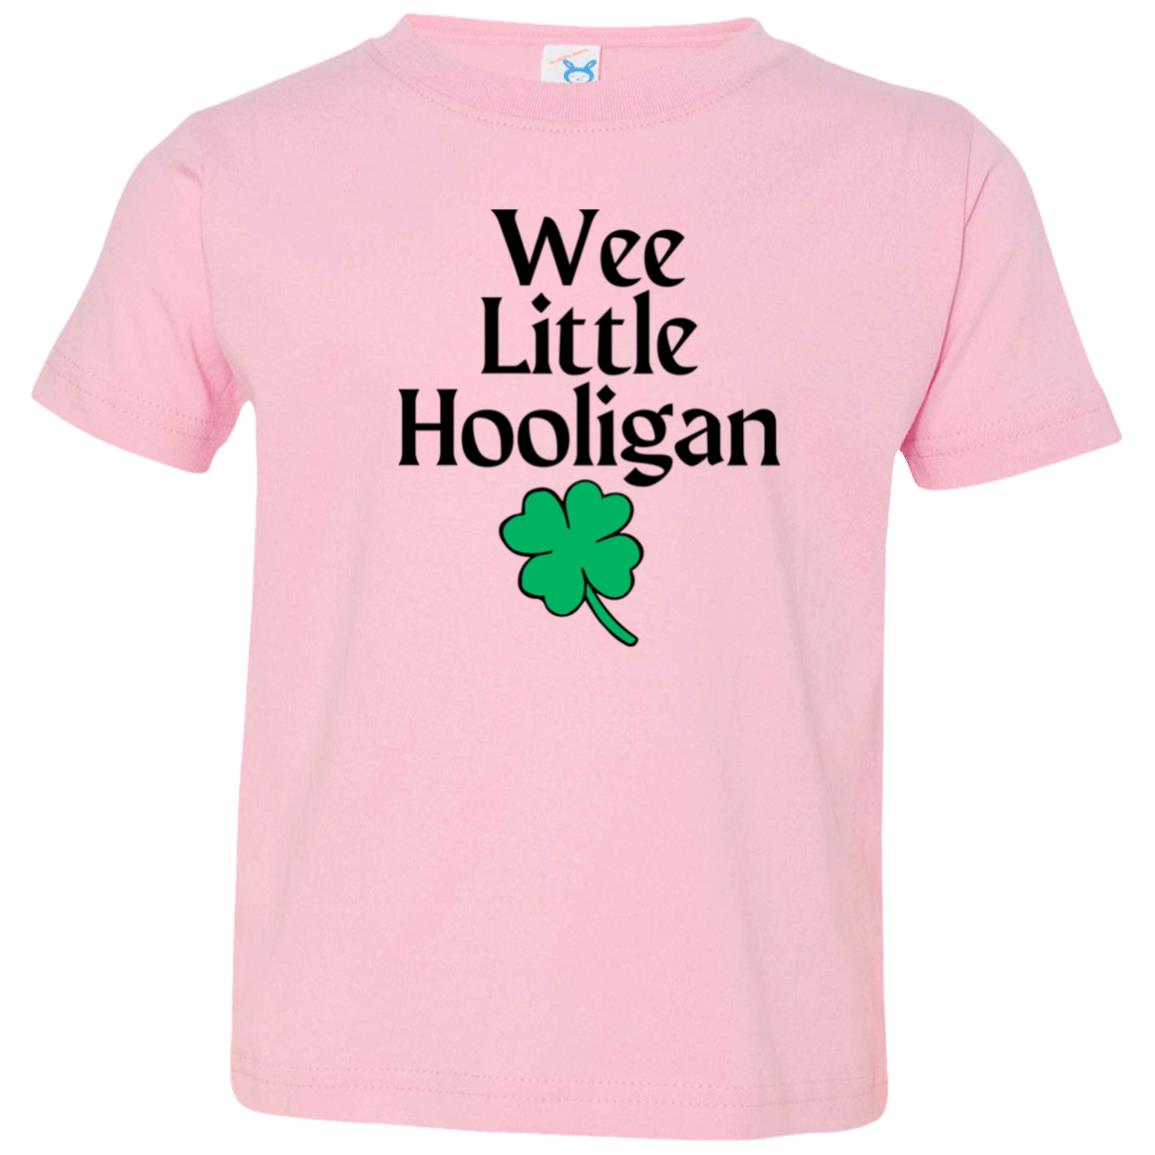 We Little Hooligan (St. Patrick's Day) - Toddler Jersey T-Shirt